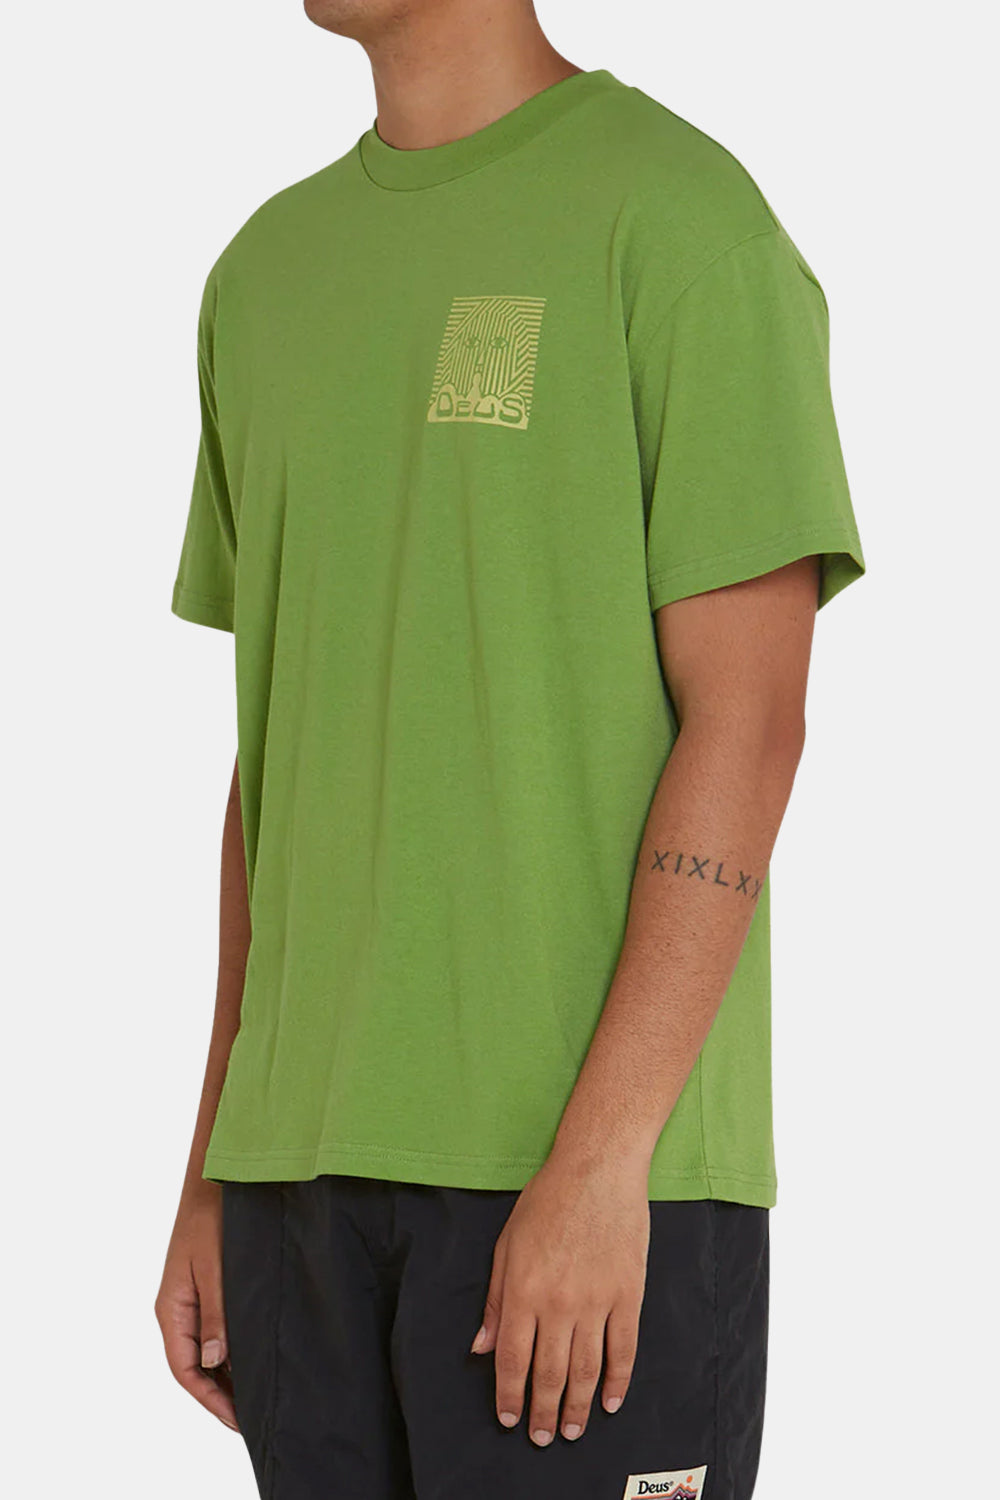 Deus Uv T-Shirt (Camp Green) | Number Six